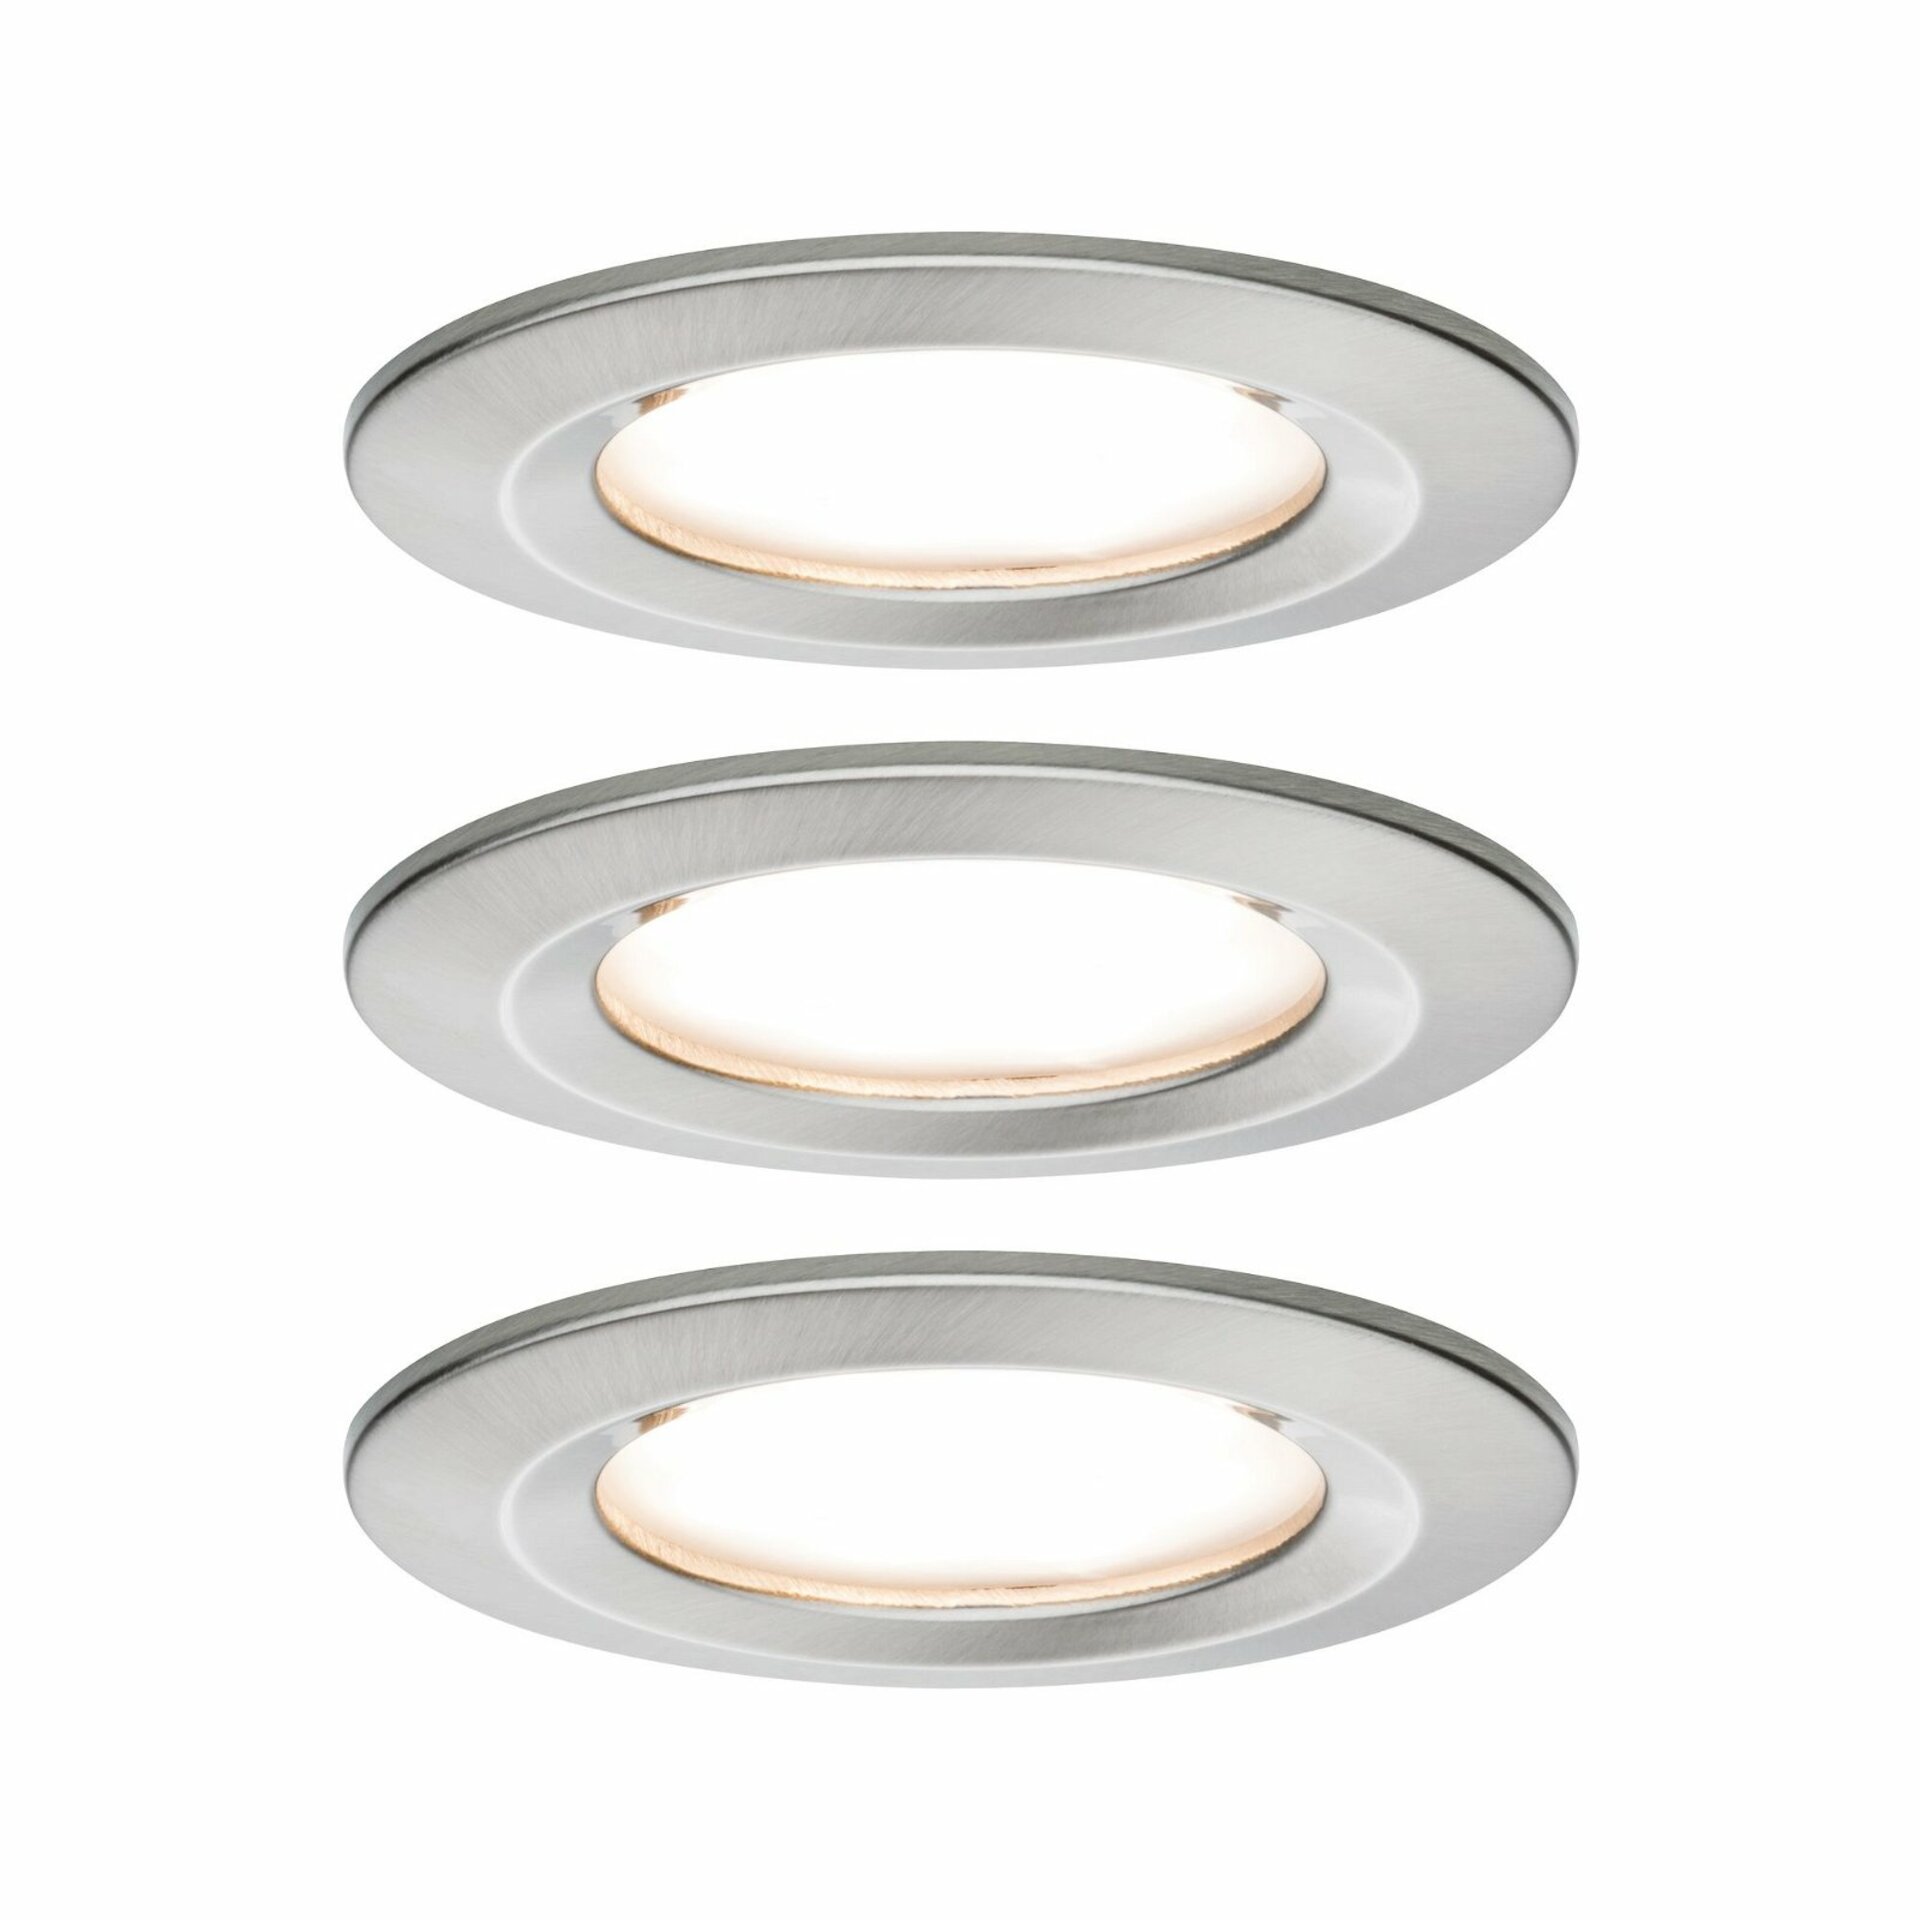 PAULMANN Vestavné svítidlo LED Nova kruhové 3x6,5W kov kartáčovaný nevýklopné 934.58 P 93458